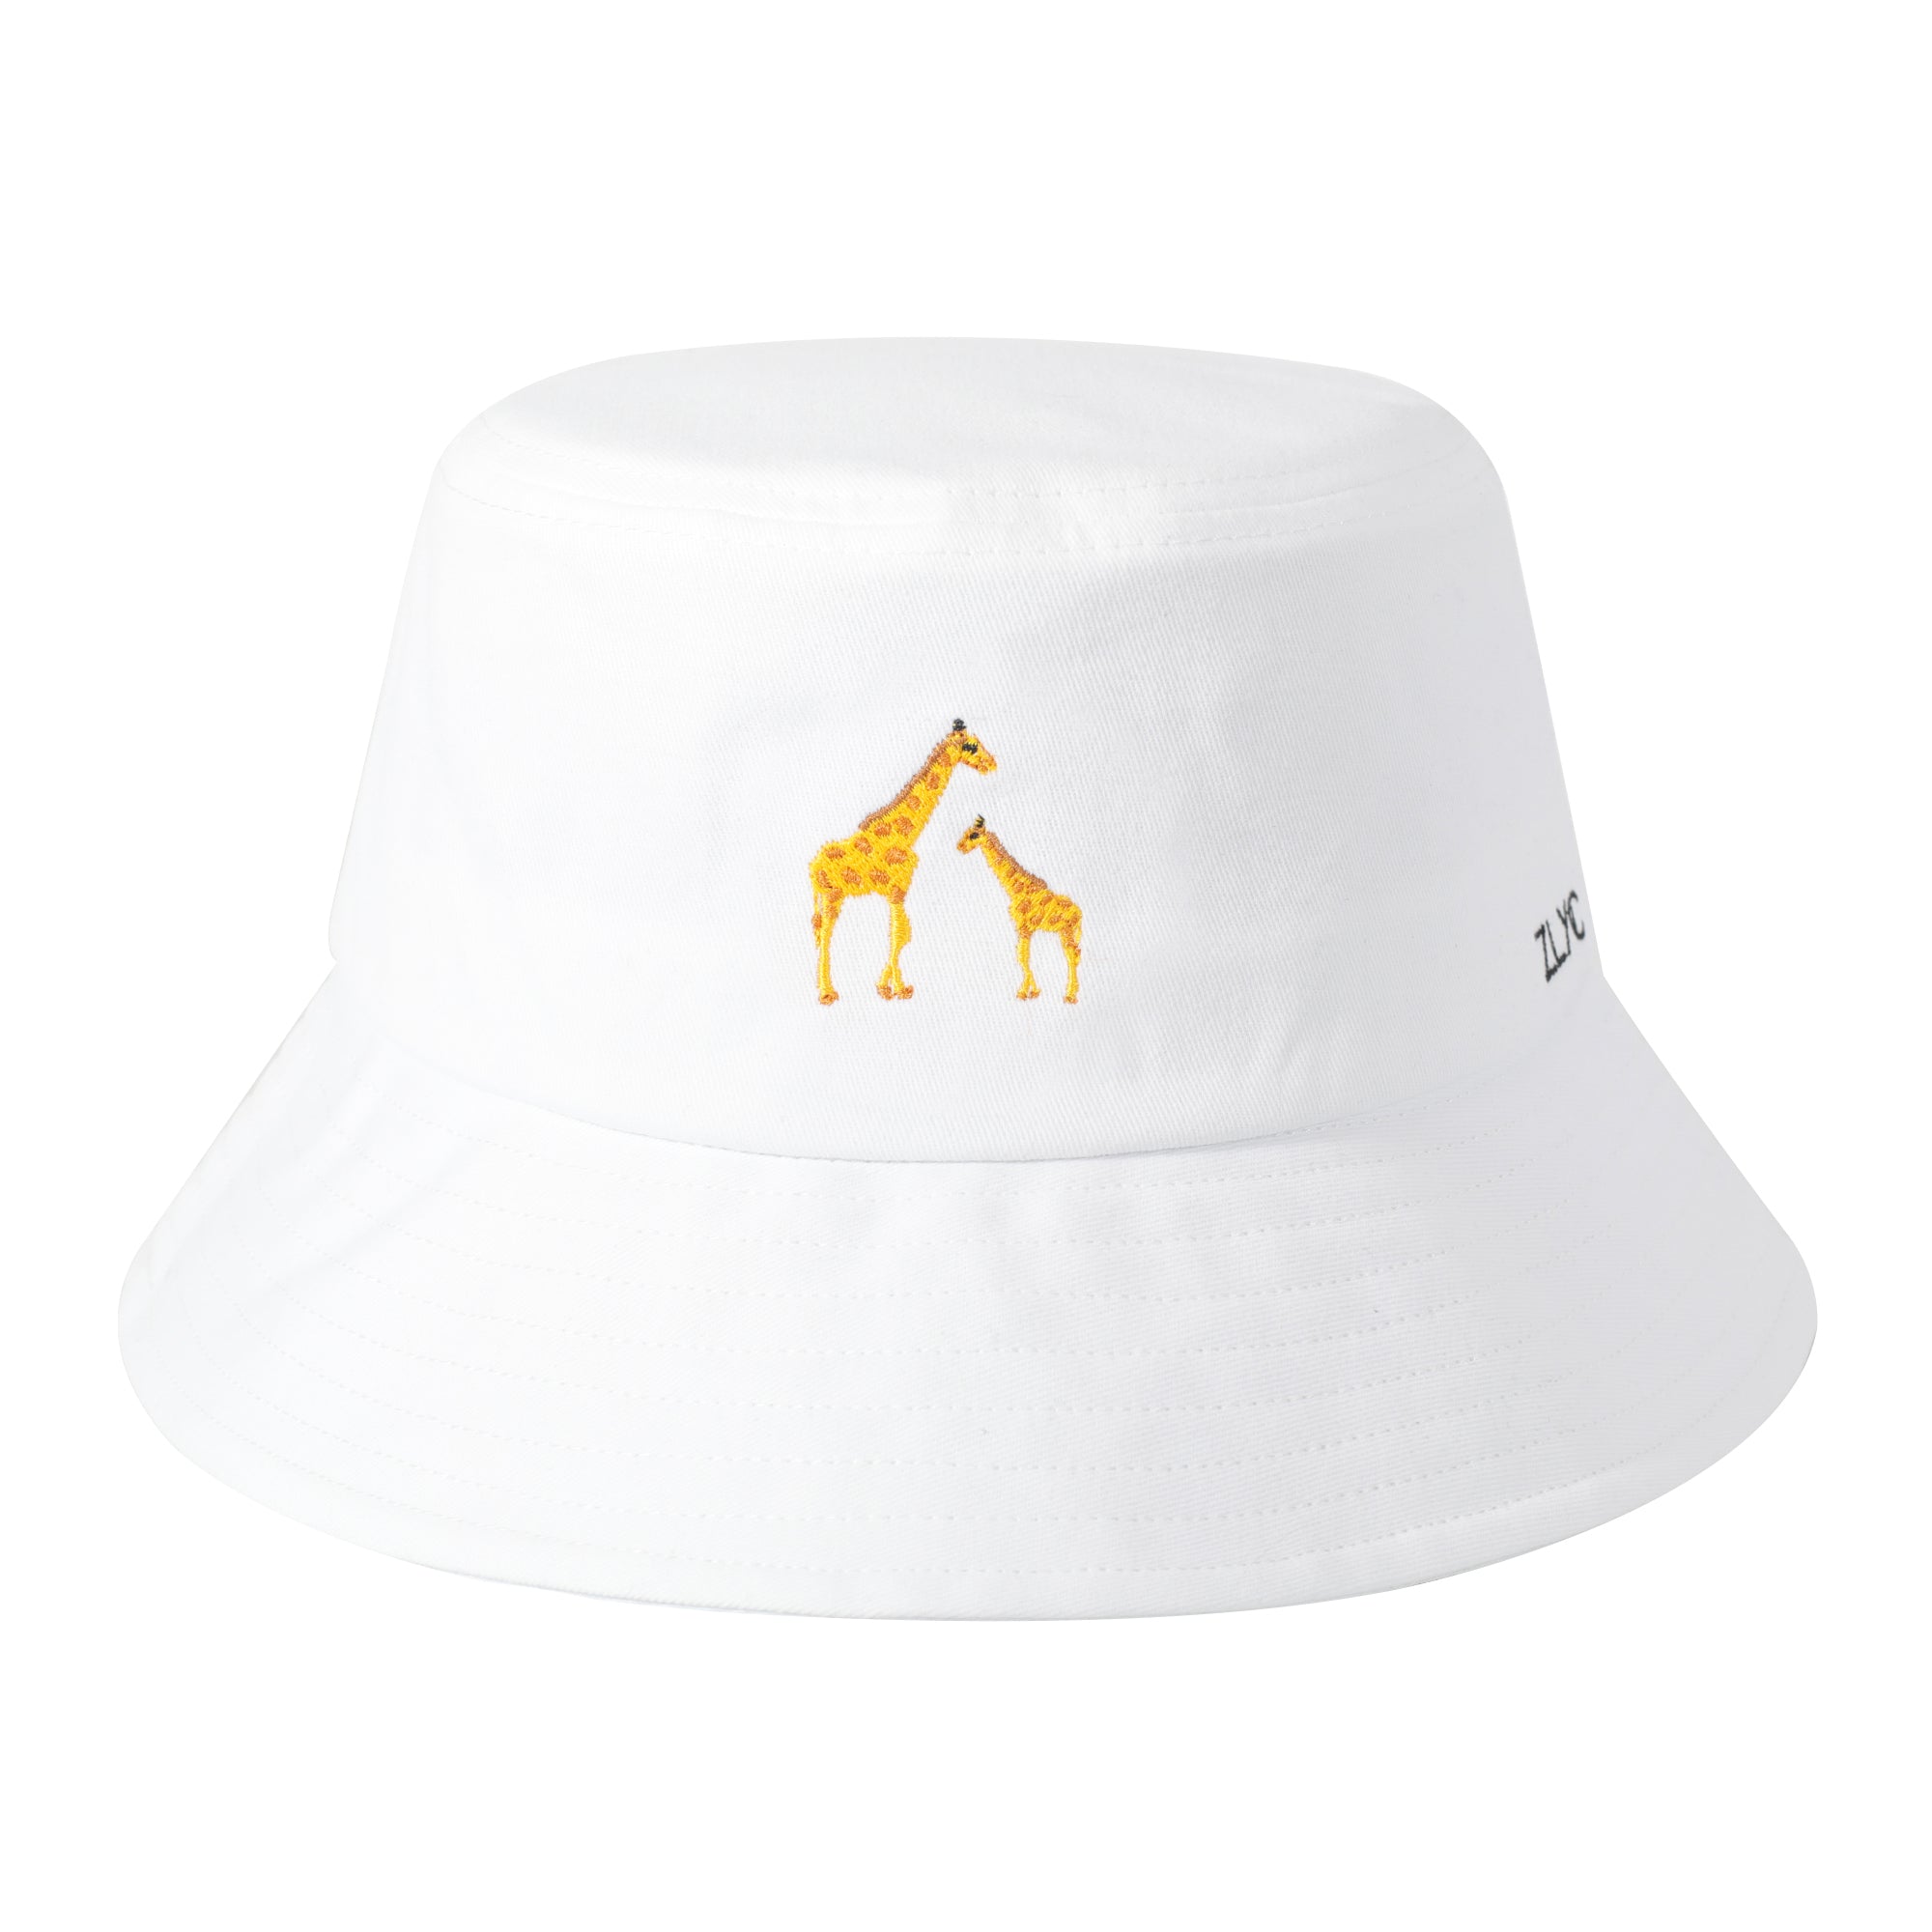 Embroidered Giraffe Bucket Hat